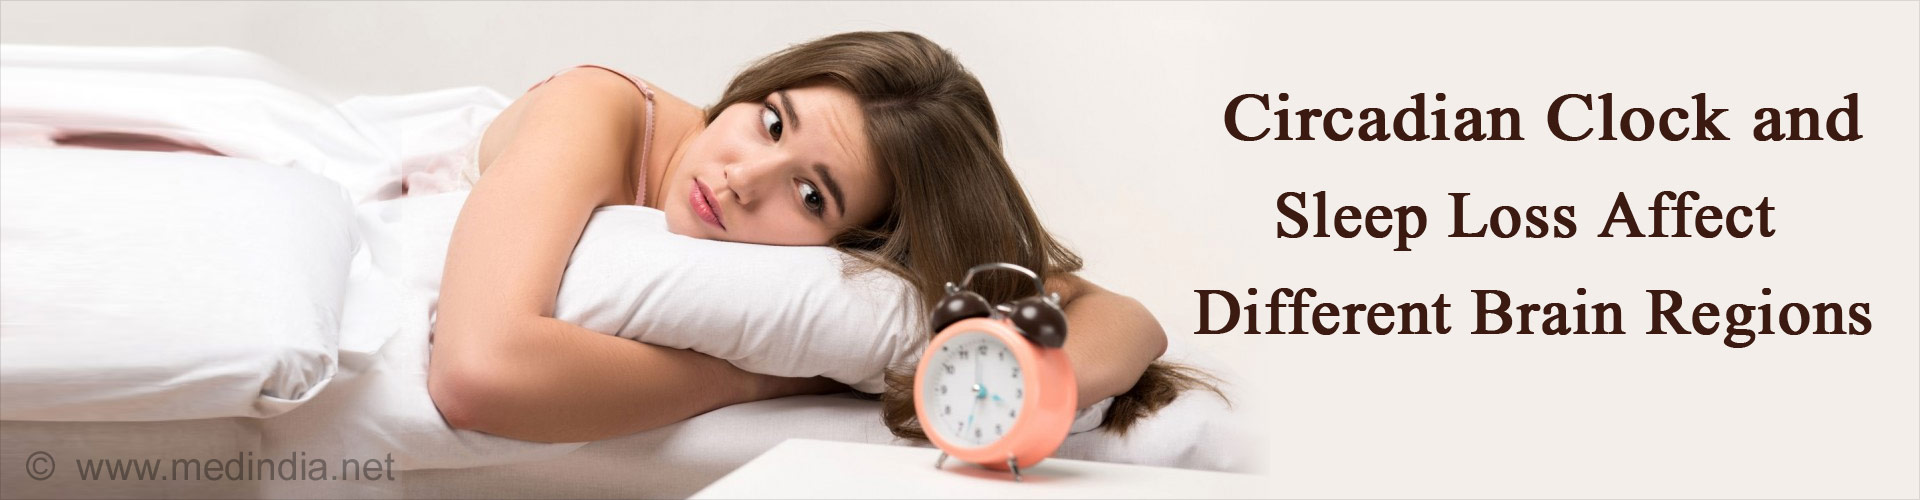 Circadian Clock and Sleep Loss Affect Different Brain Regions